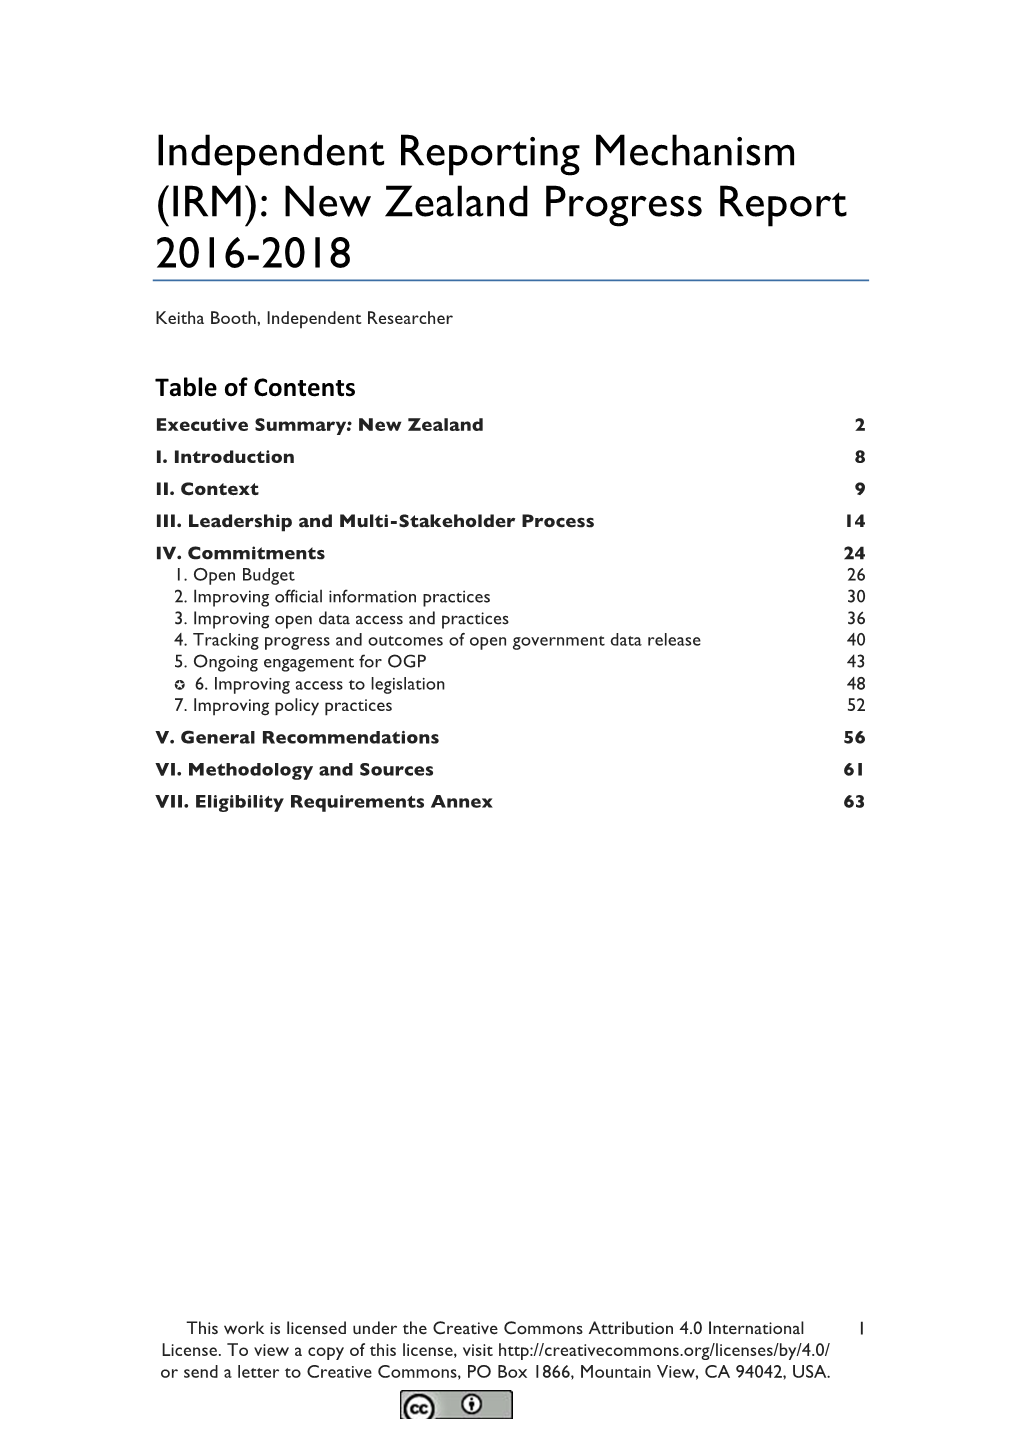 (IRM): New Zealand Progress Report 2016-2018